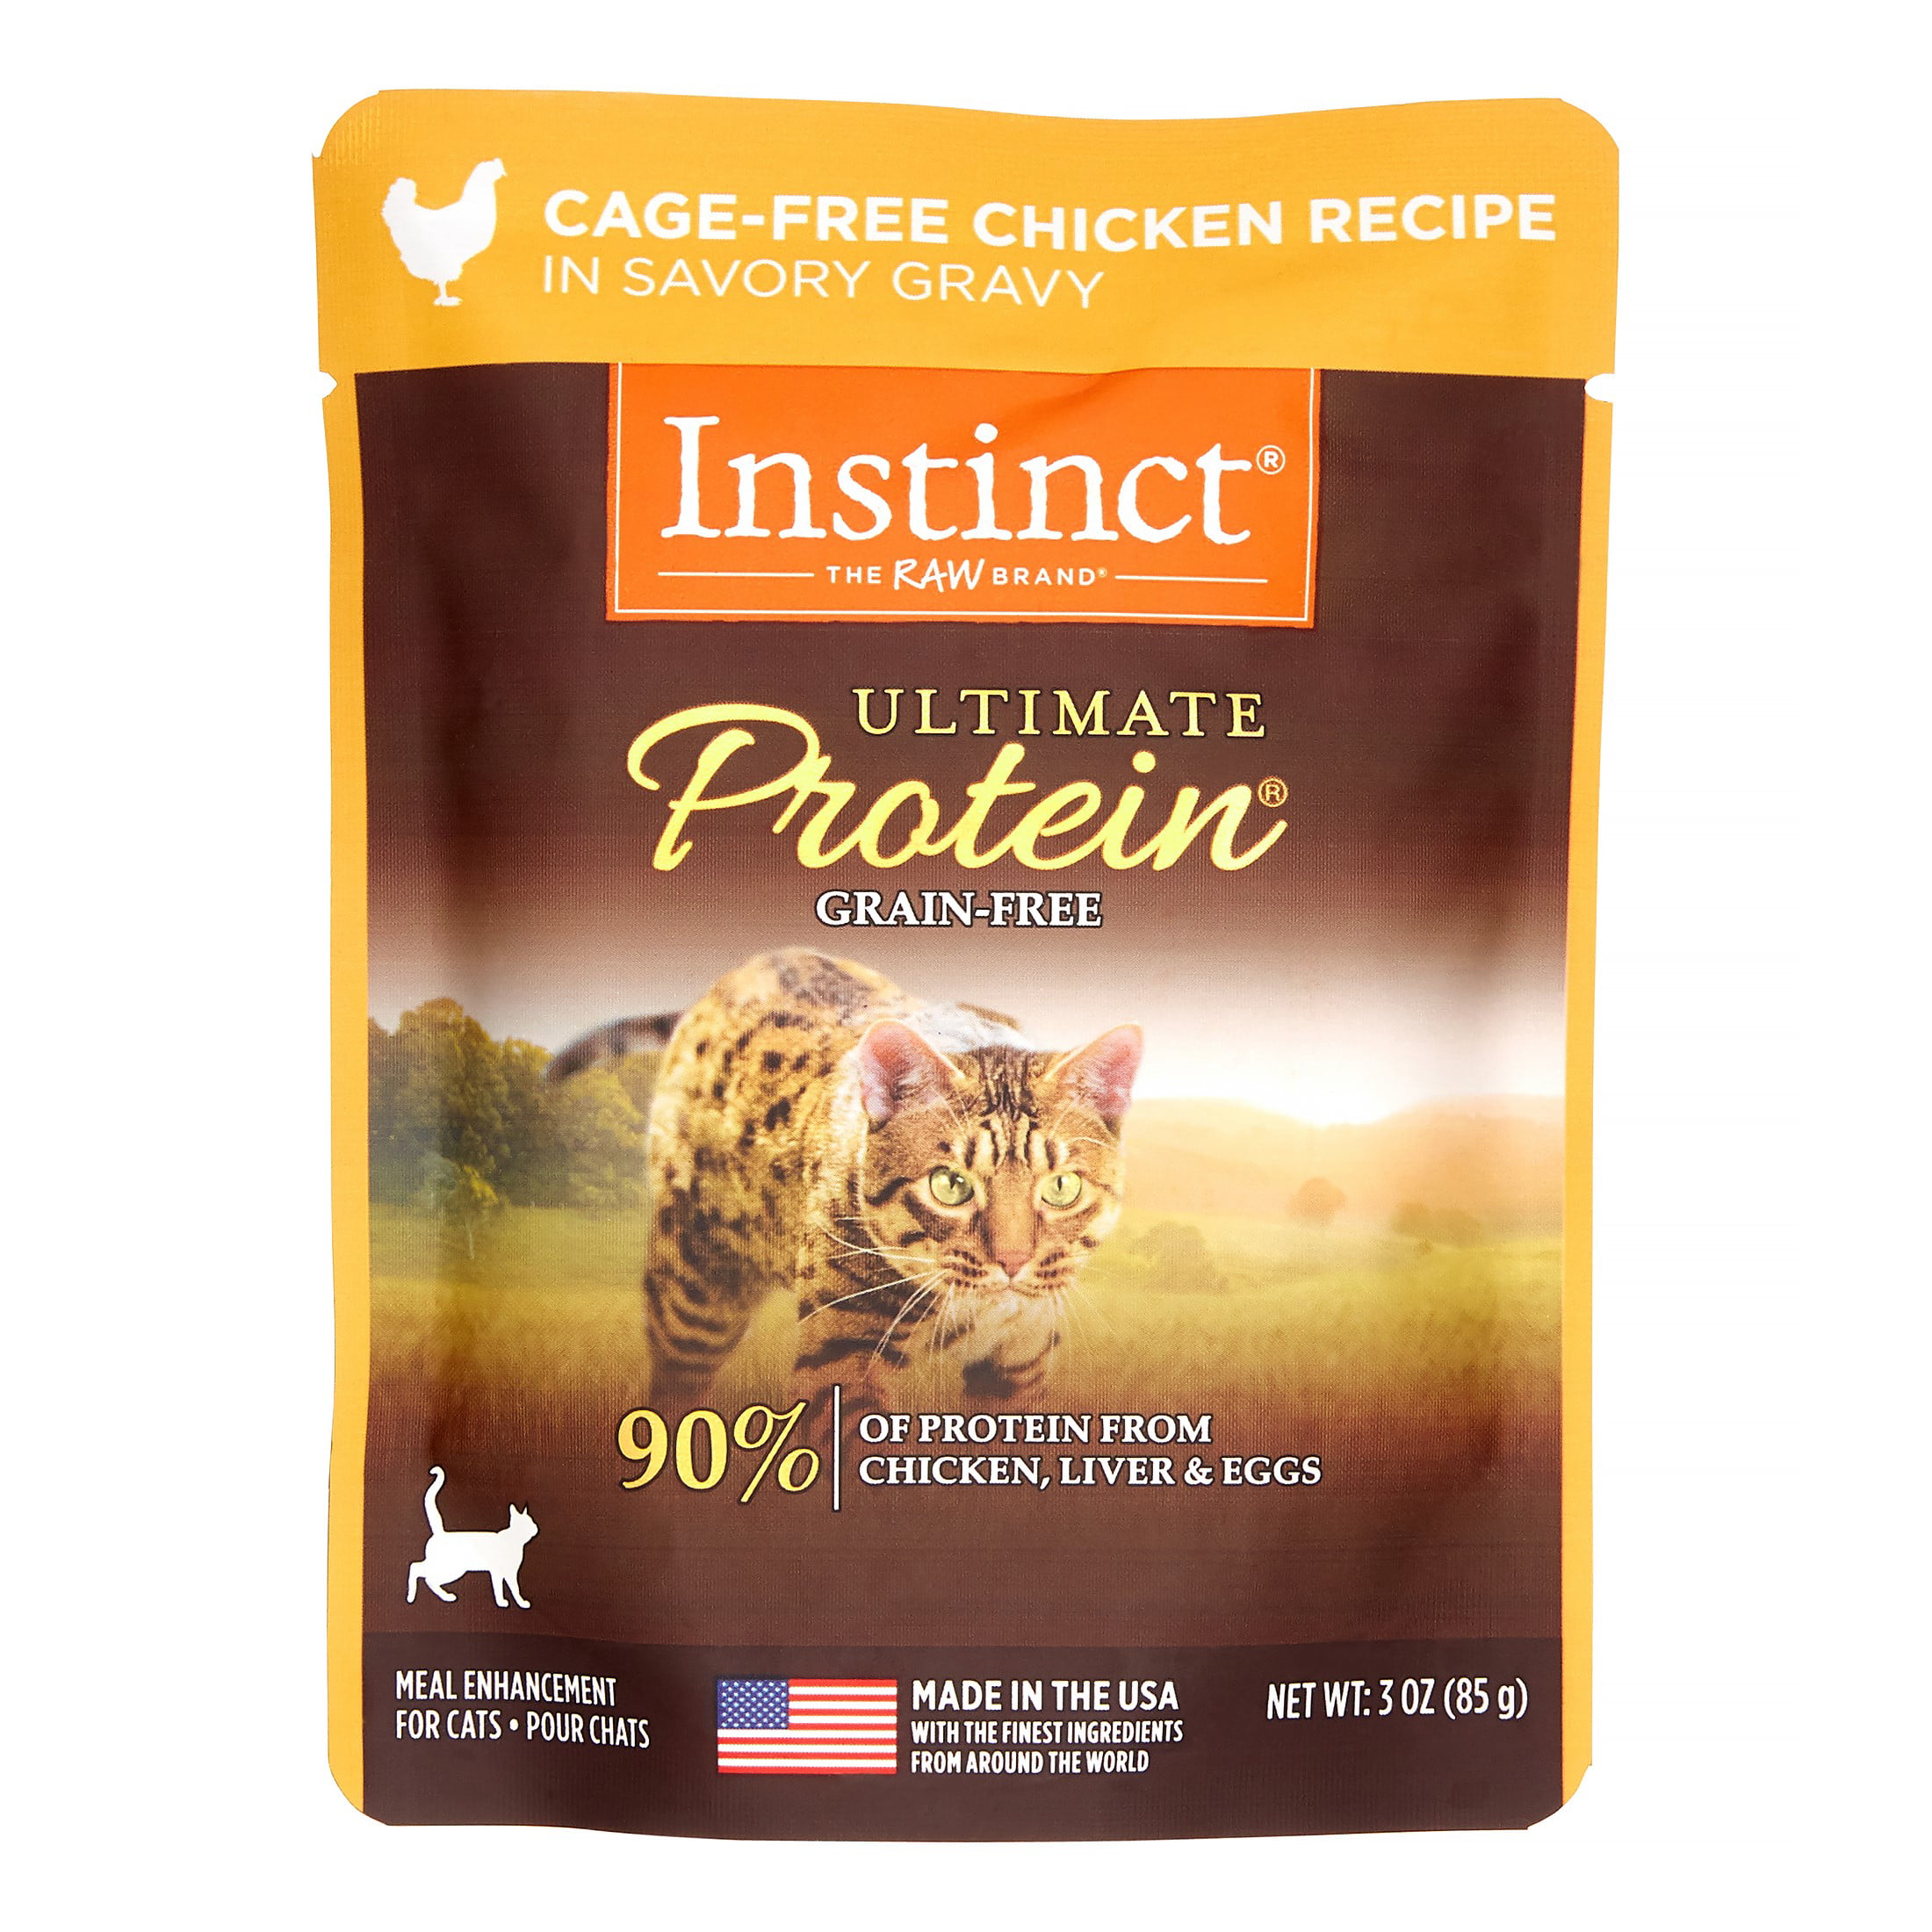 Instinct Ultimate Protein GrainFree Cage Free Chicken Recipe Natural